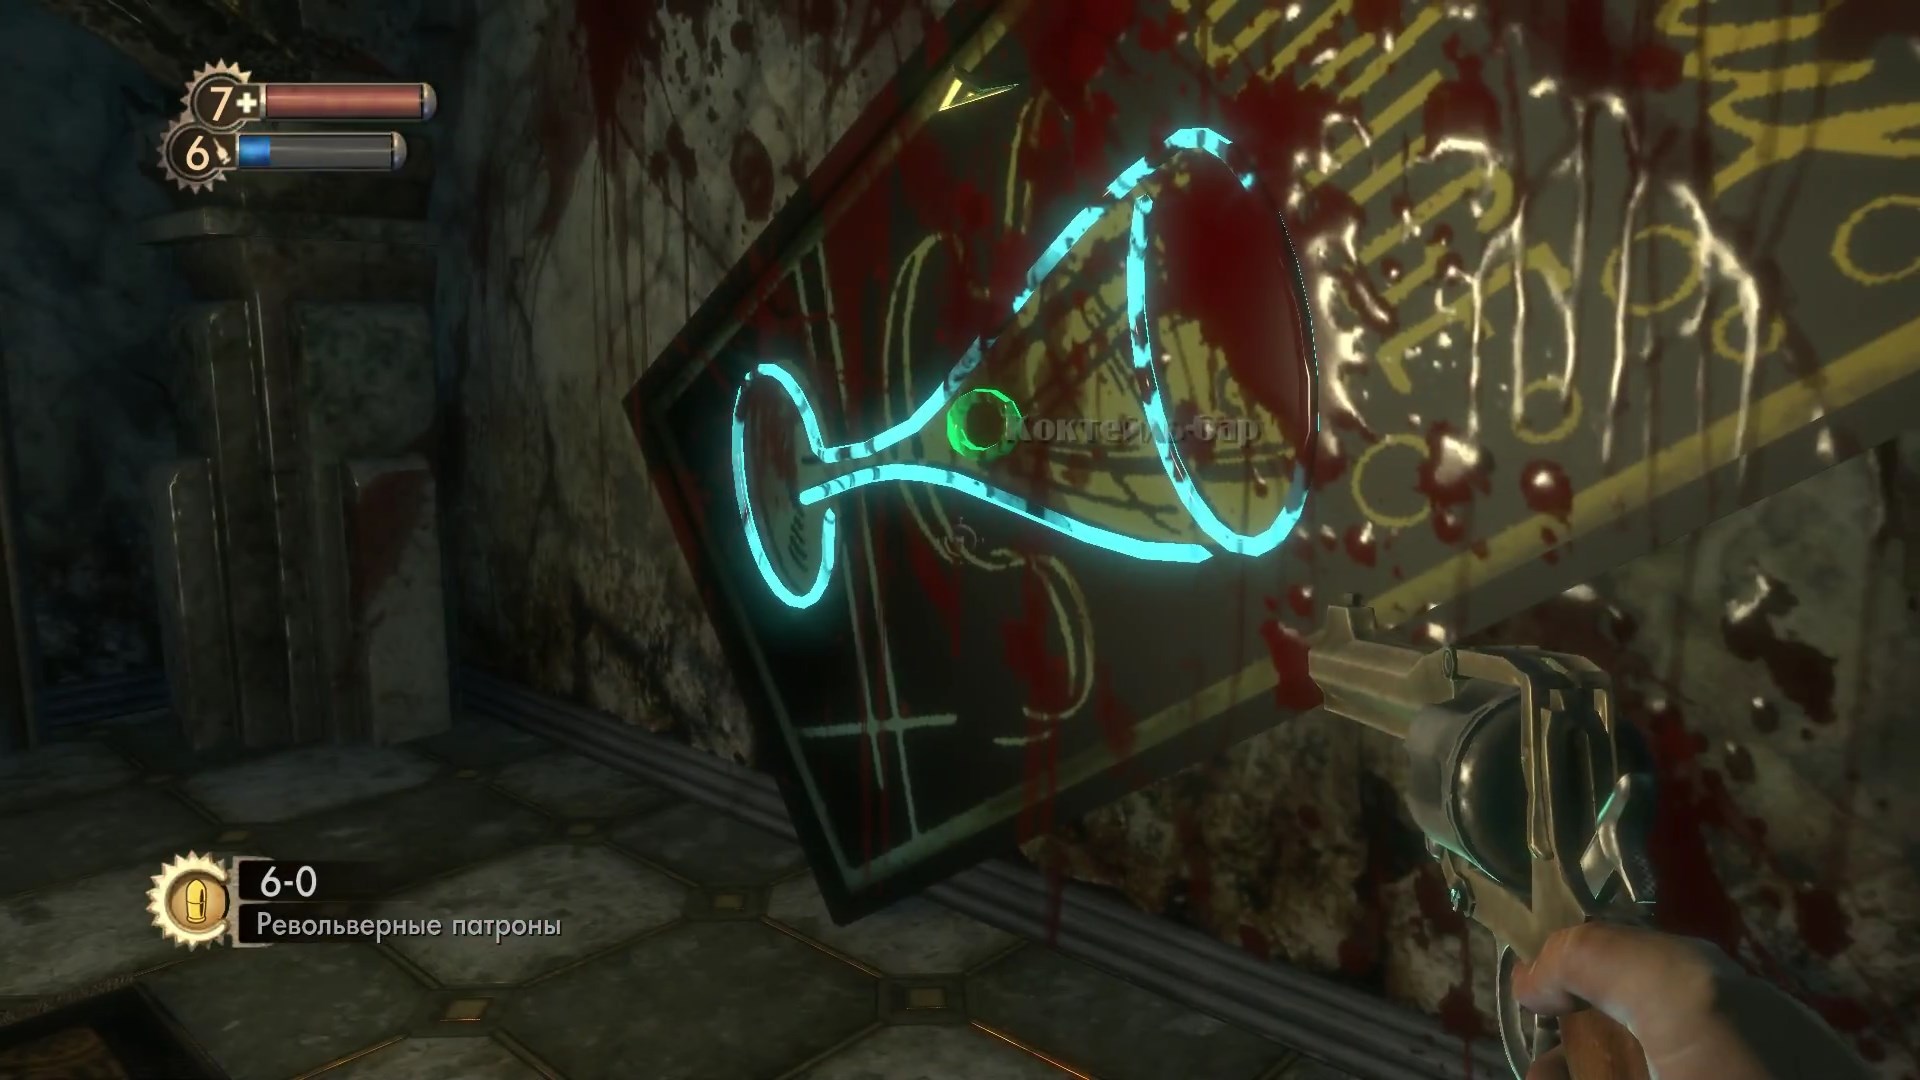 BioShock скриншот (фото)